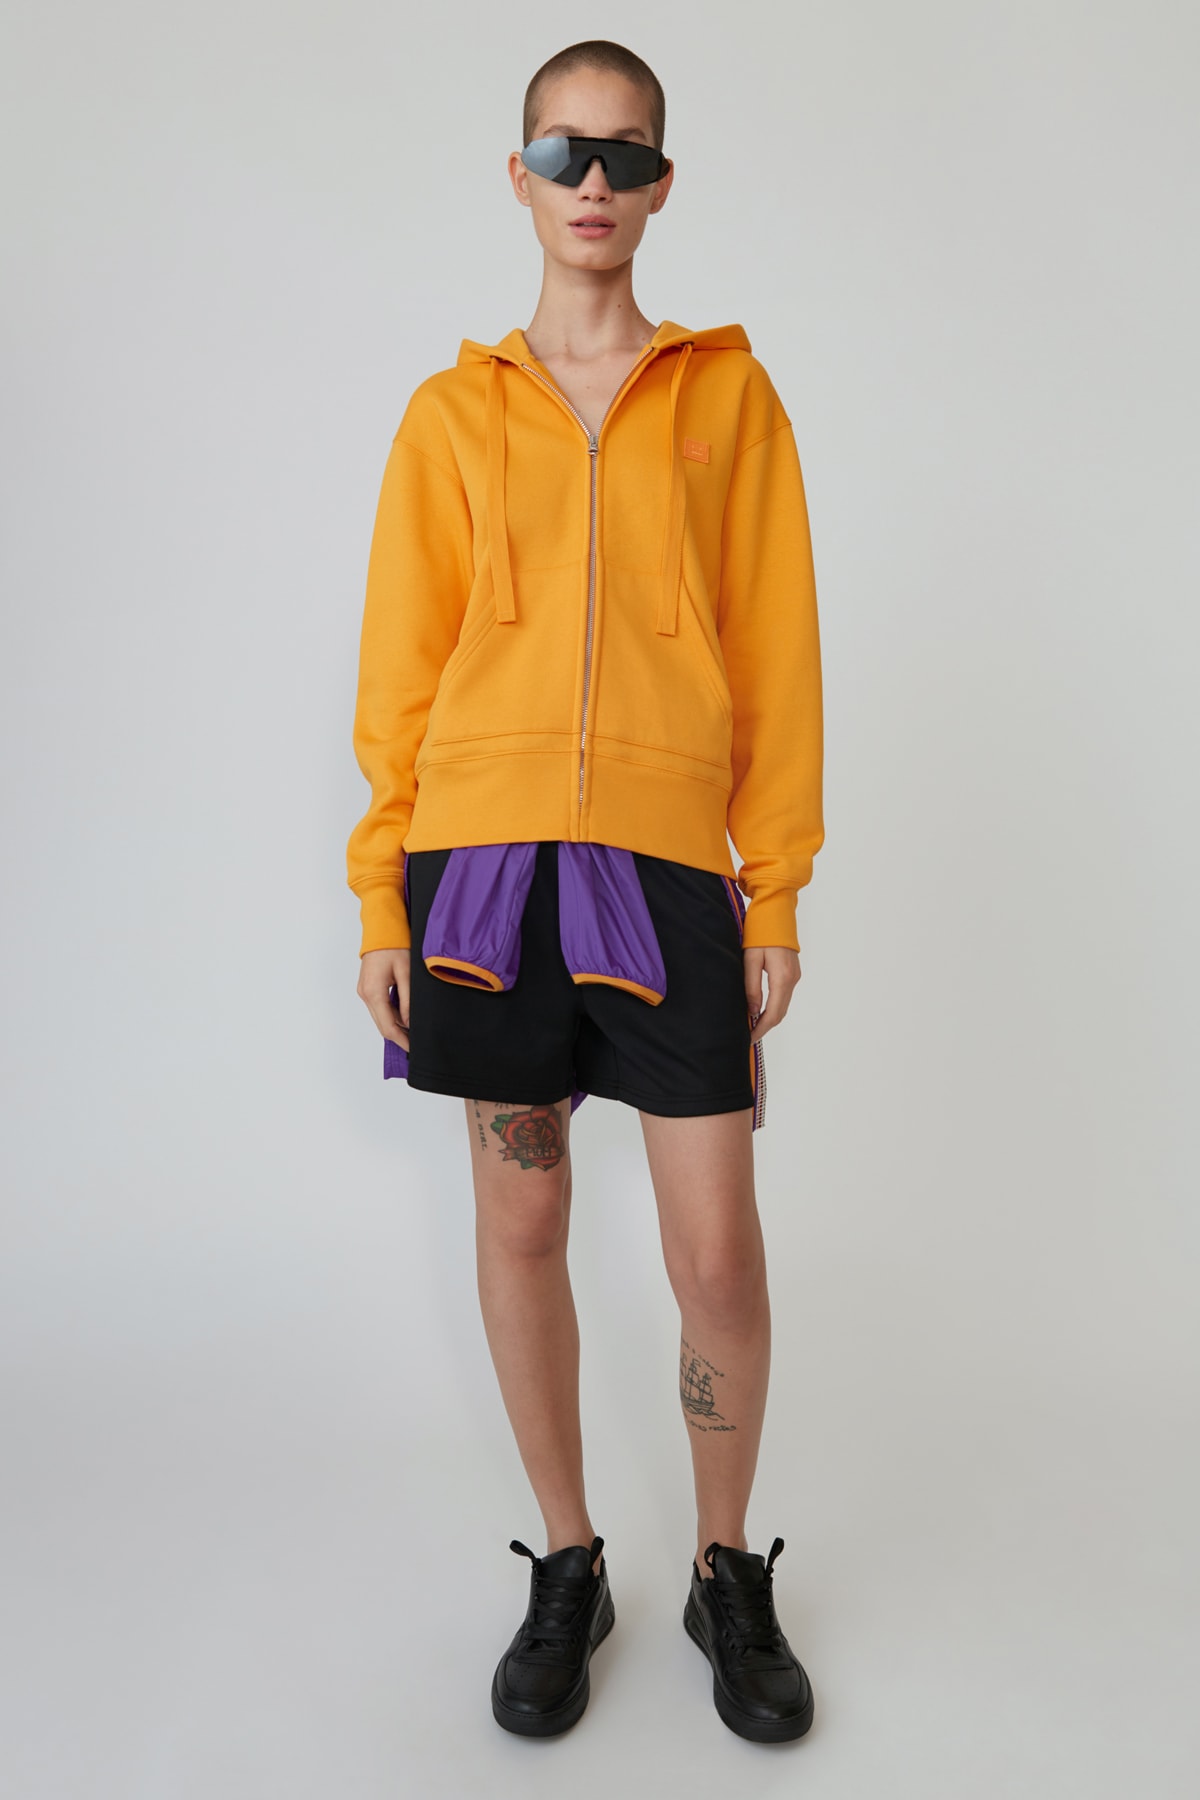 Acne Studios Spring/Summer 2019 Face Collection Hooded Sweatshirt Orange Shorts Black